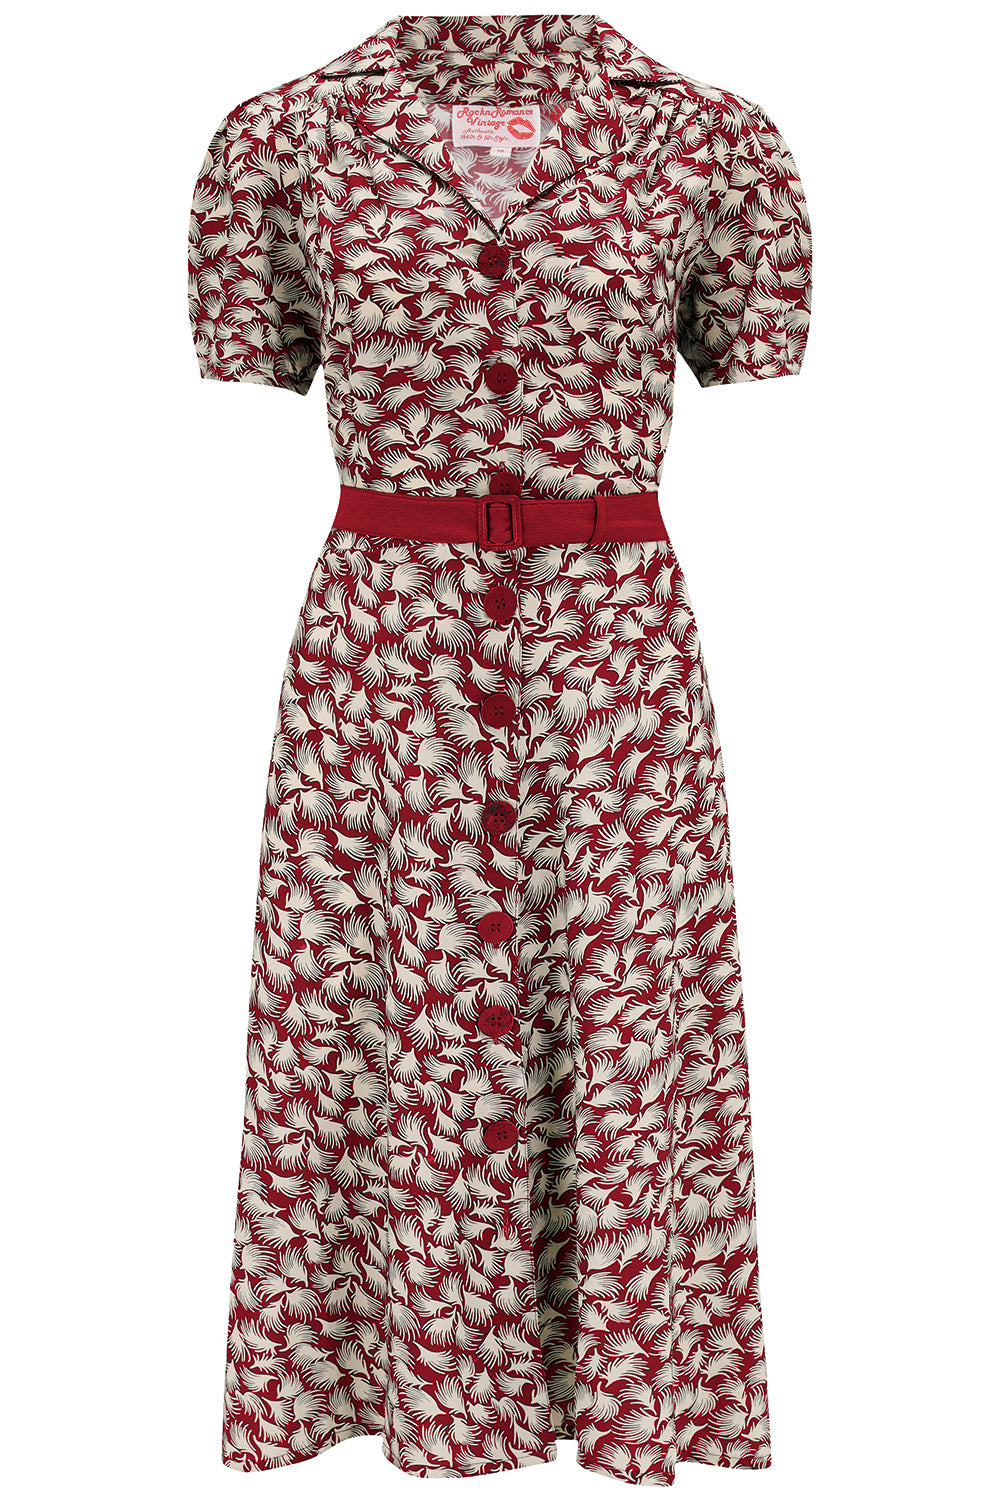 The "Charlene" Shirtwaister Dress in Wine Whisp Print , True 1950s Vintage Style